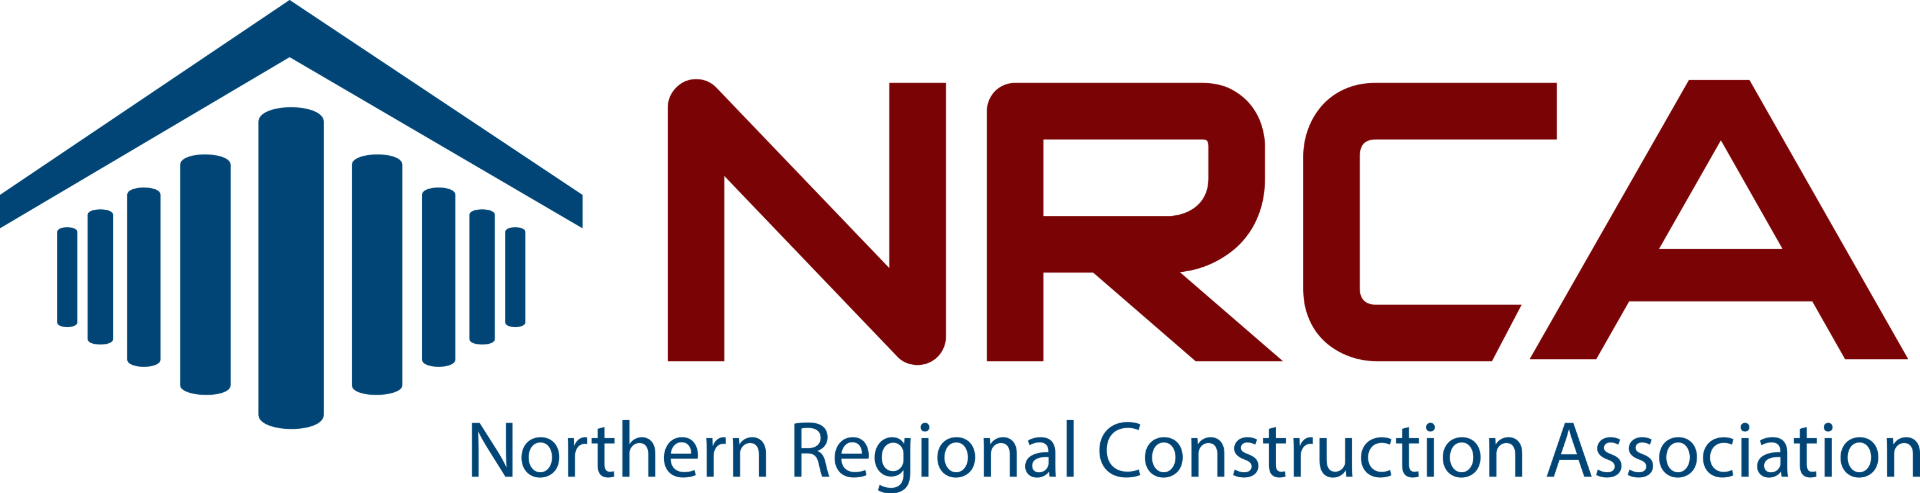 NRCA Logo.png